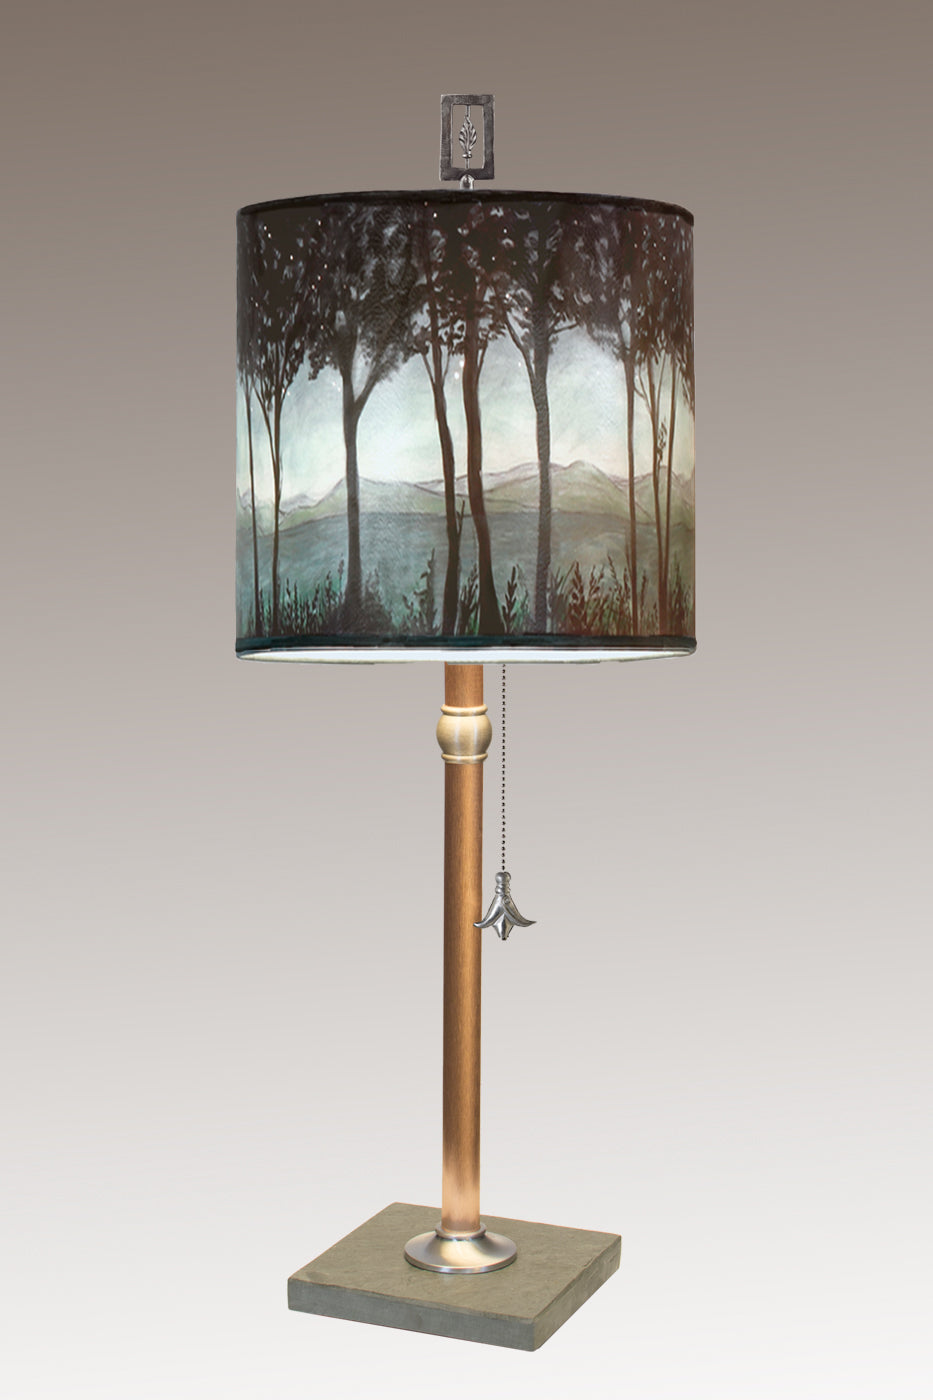 Copper Table Lamp with Medium Drum Shade in Twilight